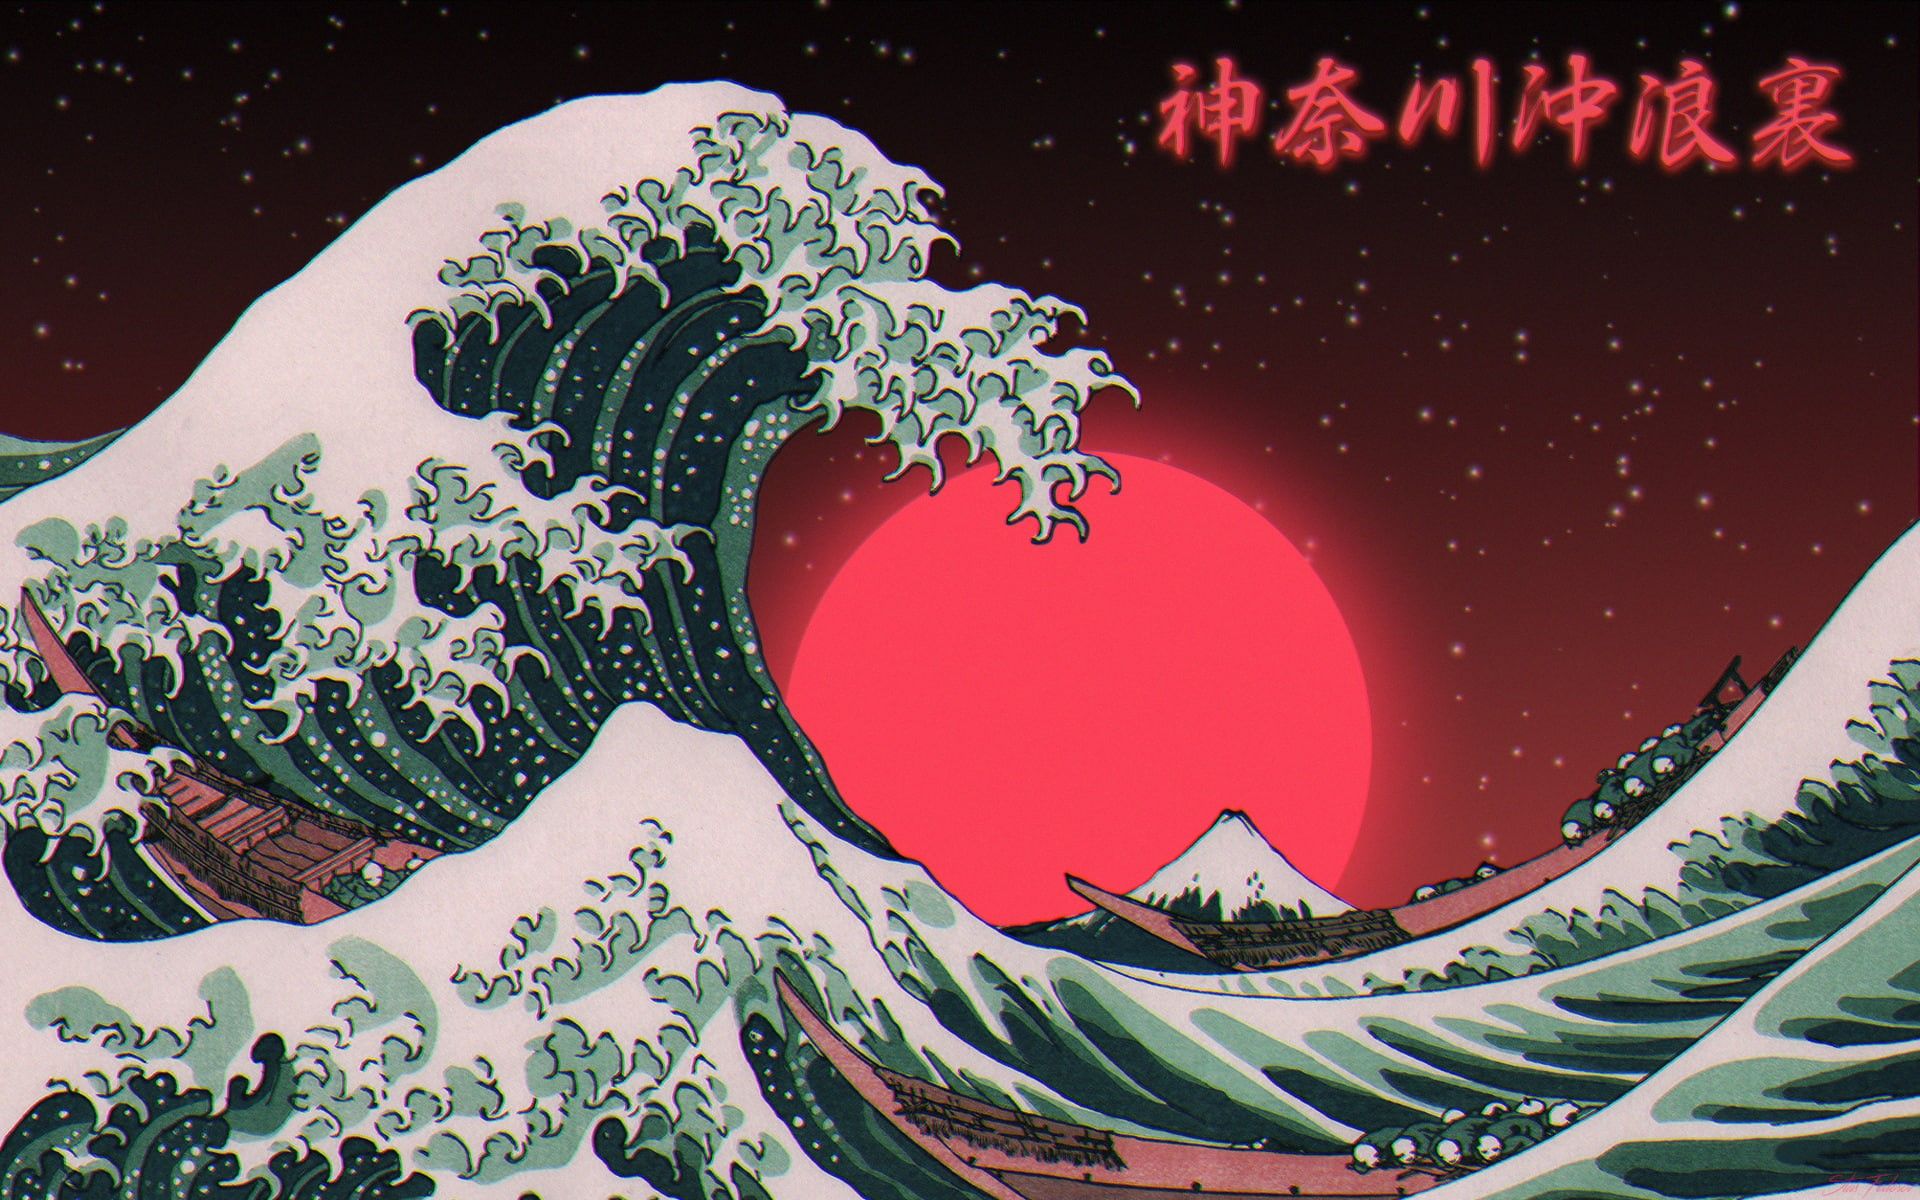 Wallpaper / Photohop, 1080P, Typography, sea, The Great Wave Off Kanagawa, Japan, digital art free download